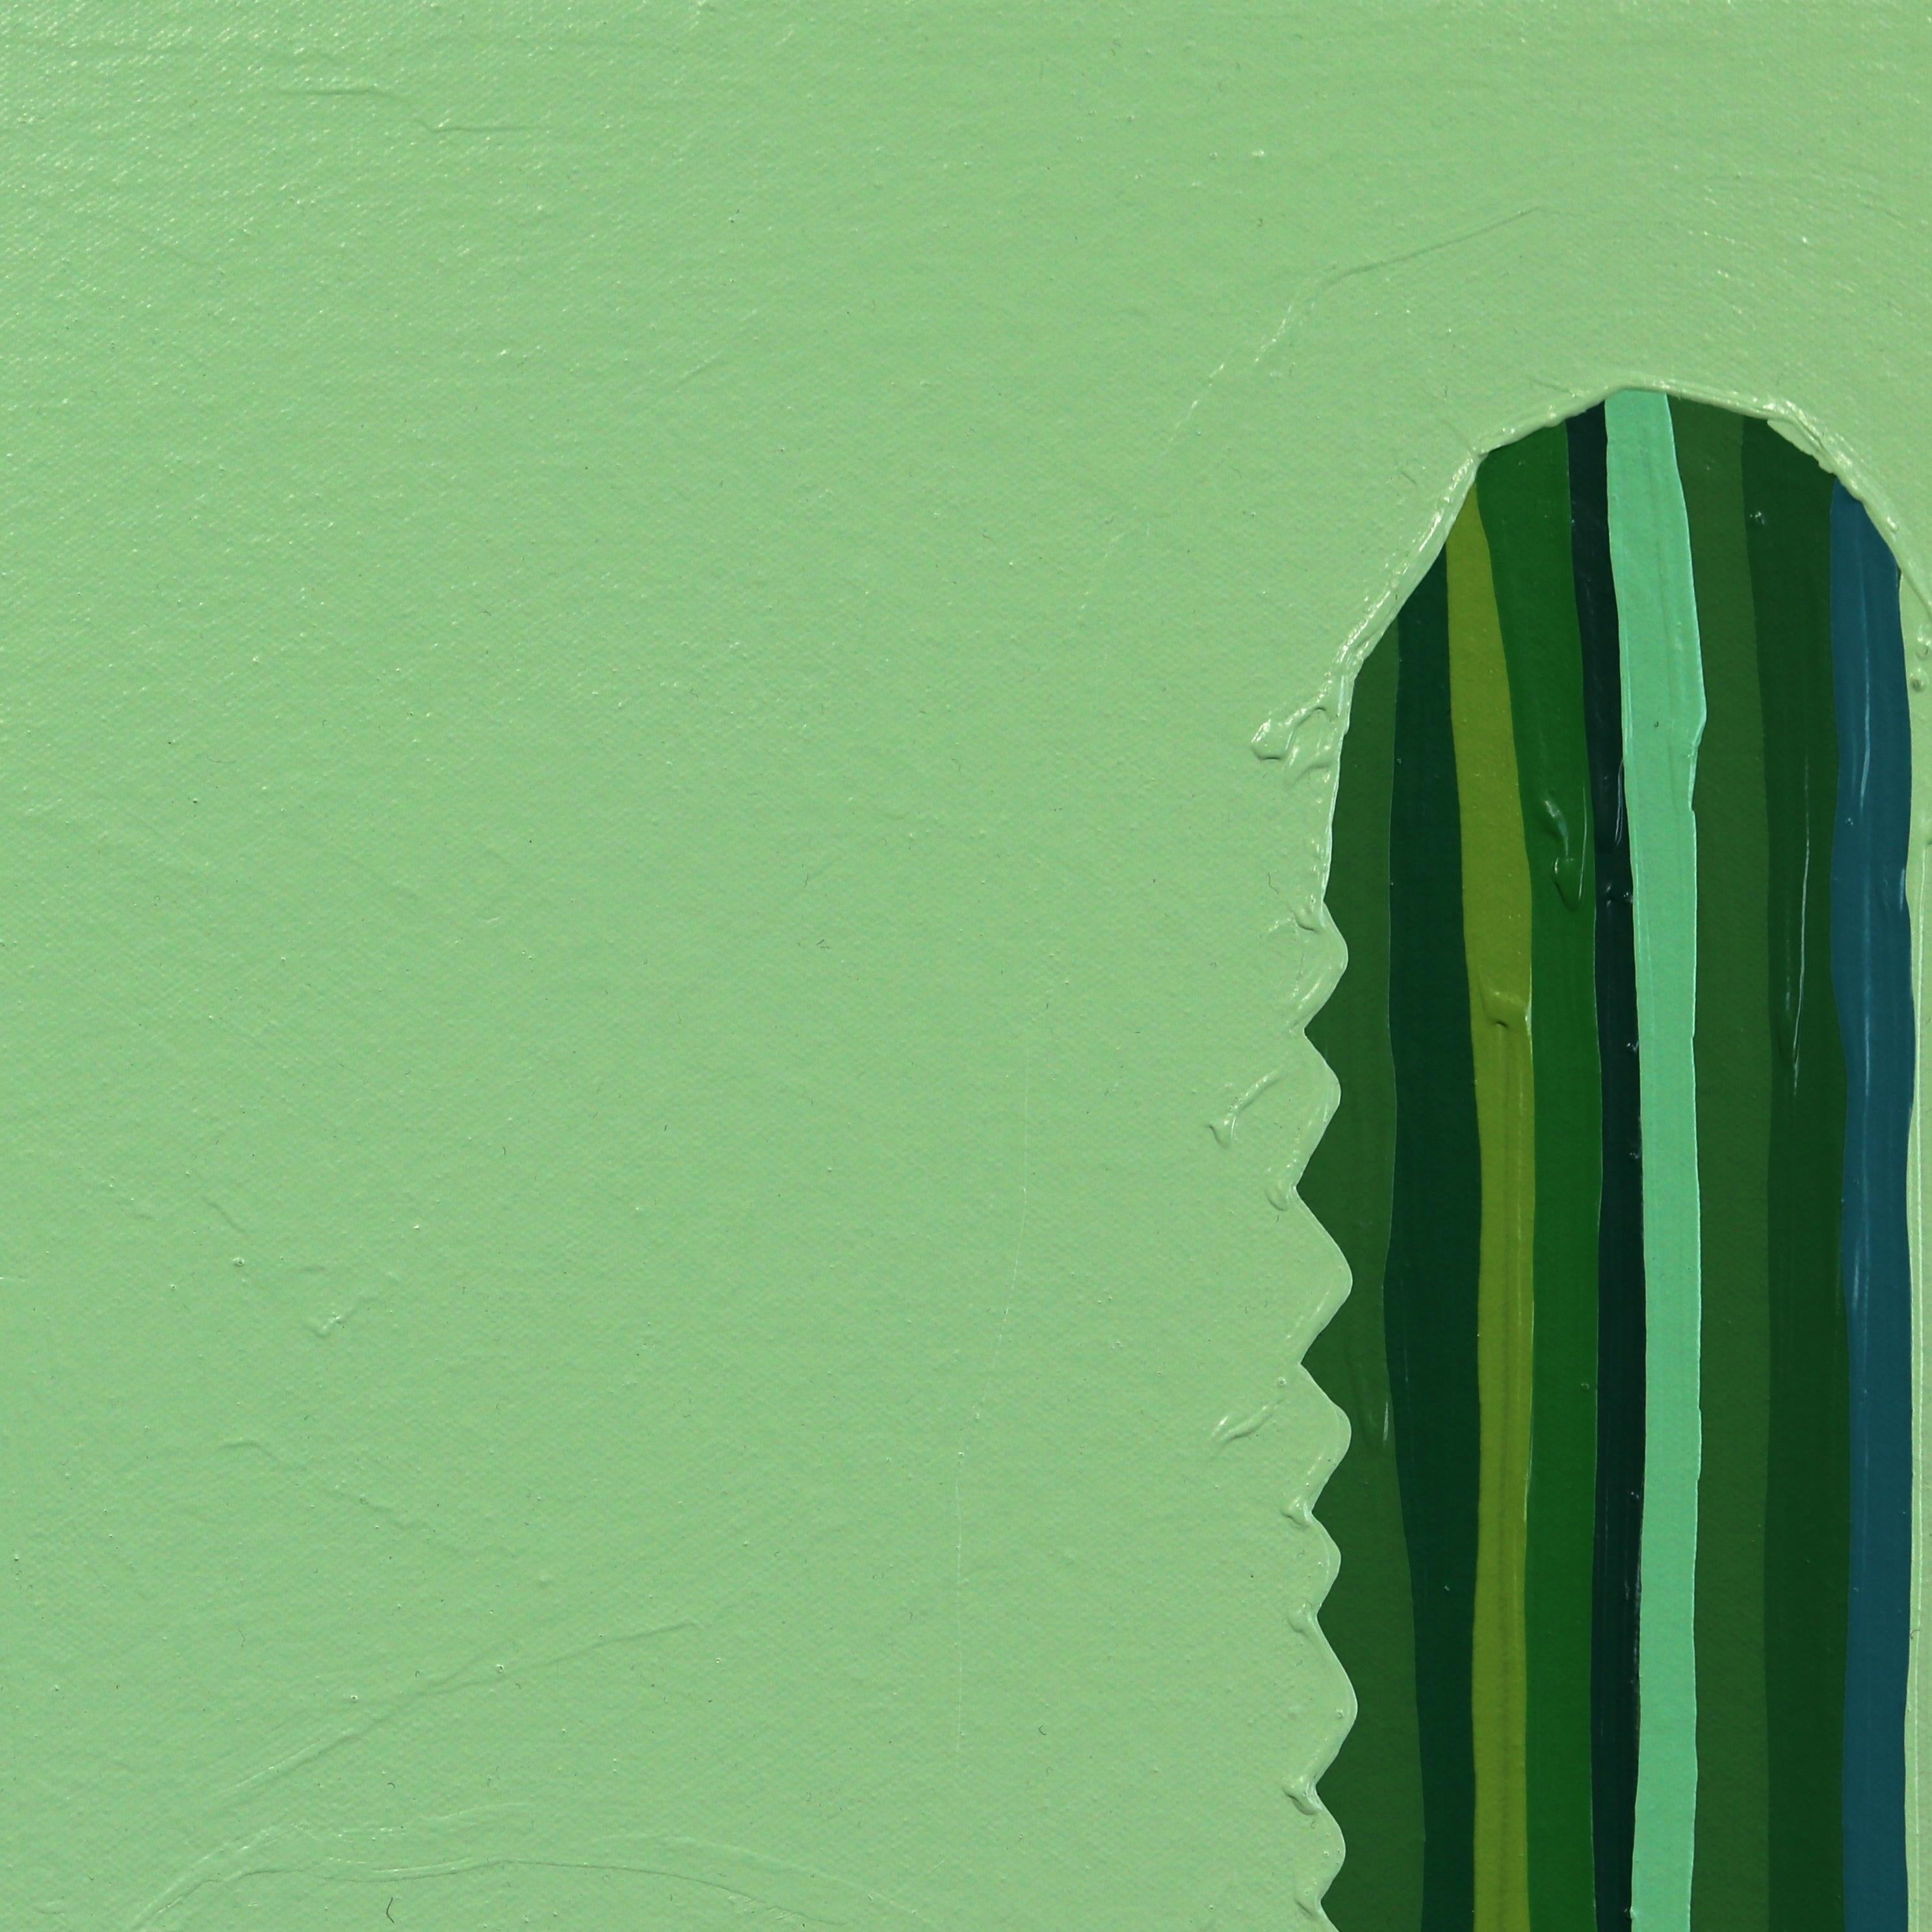 Verde y Verde -  Vibrant Green Southwest Inspired Pop Art Landscape Painting For Sale 3